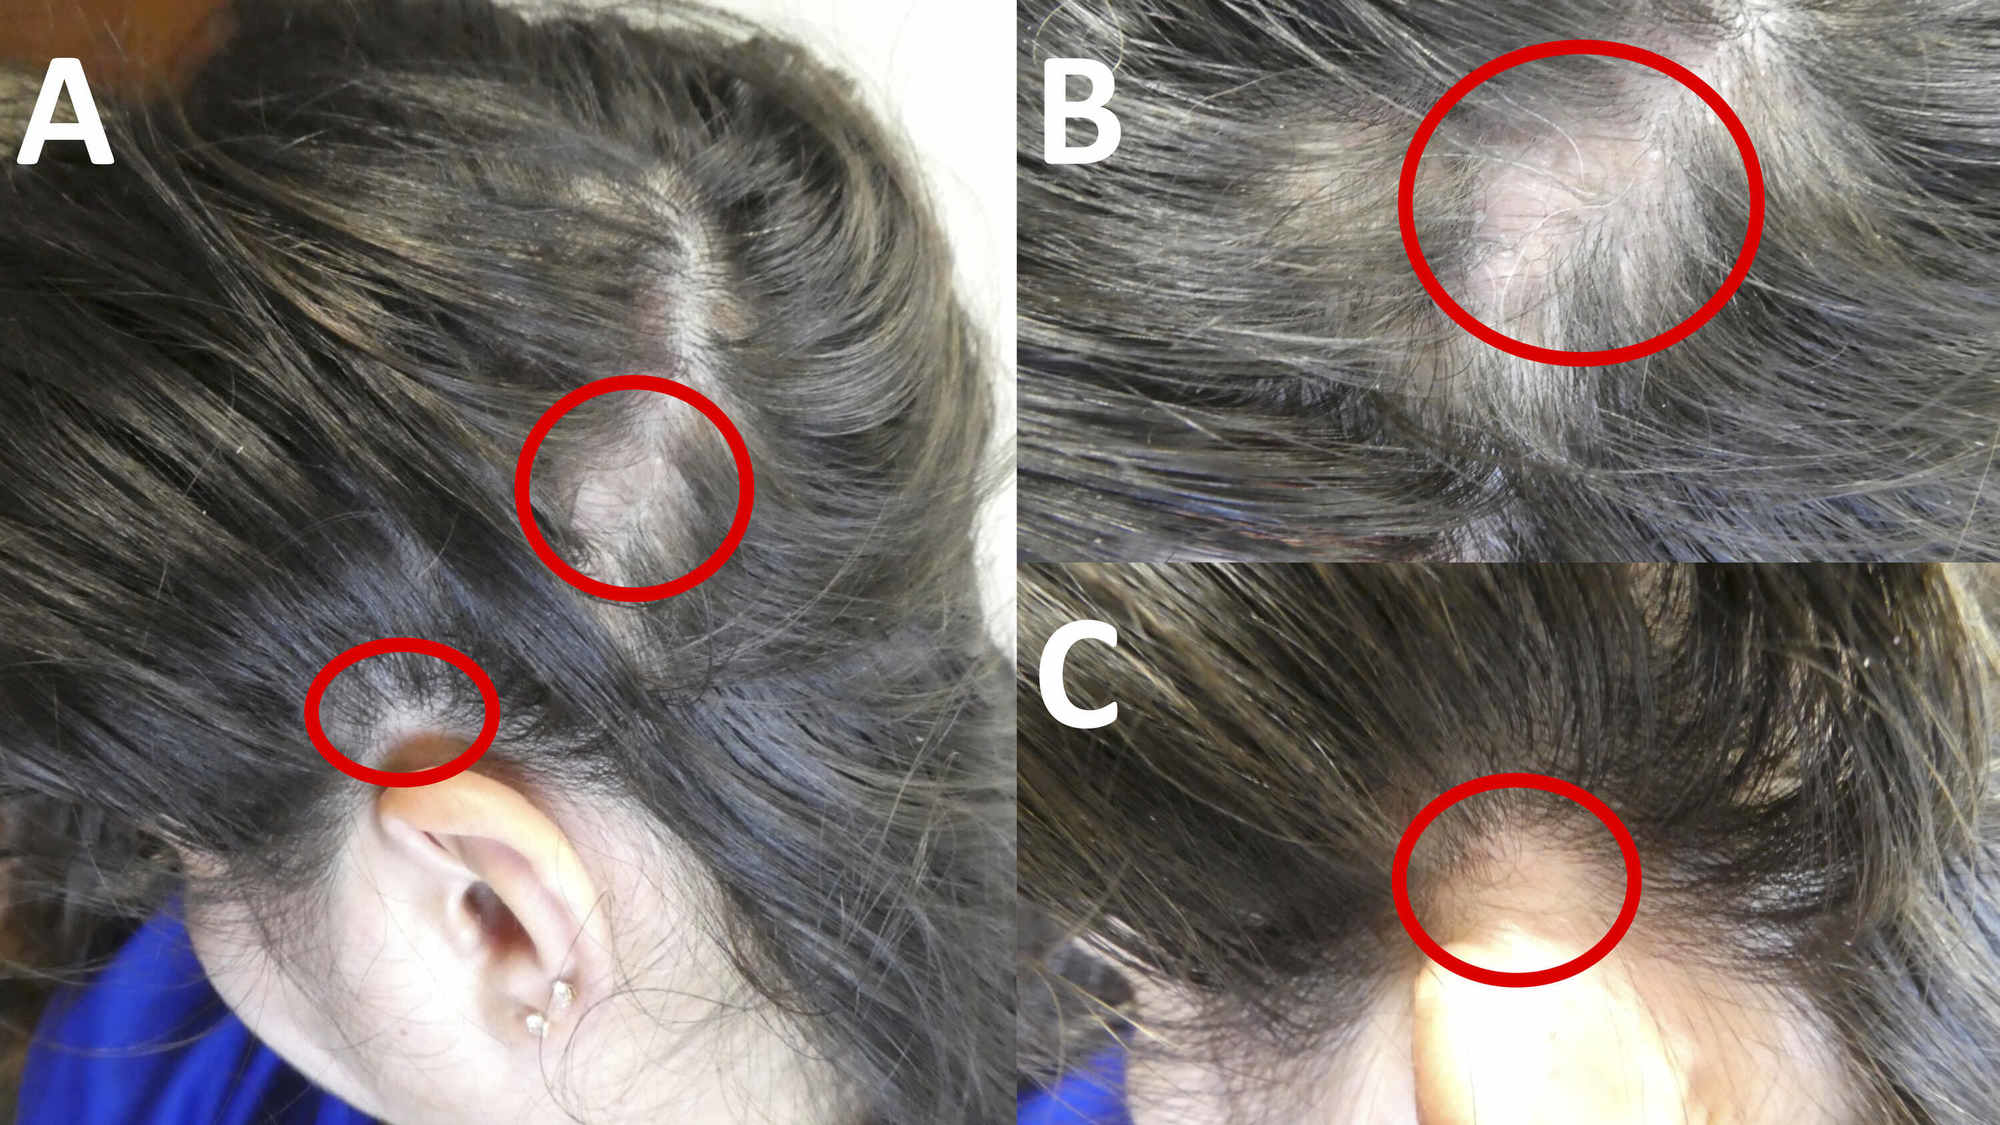 Cureus Systemic Lupus Erythematosus Presenting As Alopecia Areata